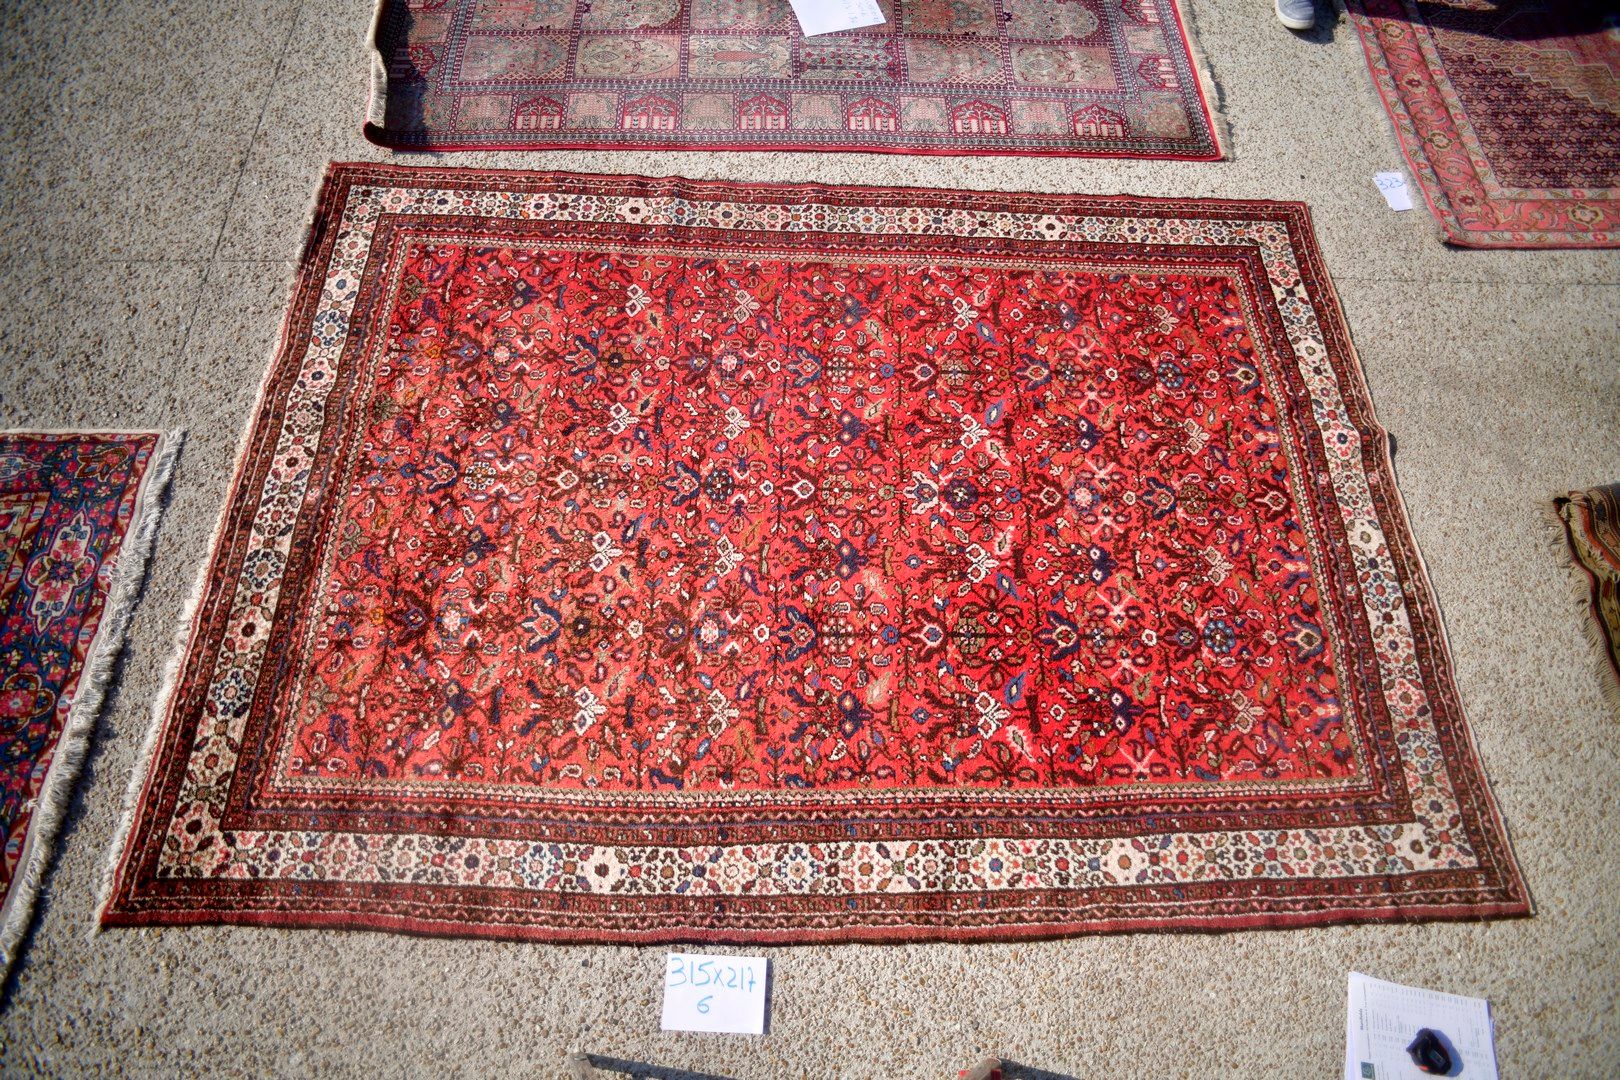 Null Hosseinhab（伊朗），1980年。

羊毛天鹅绒，棉质基础。

红宝石领域，有几何风格的开花植物。

状况良好。

315 x 217 cm